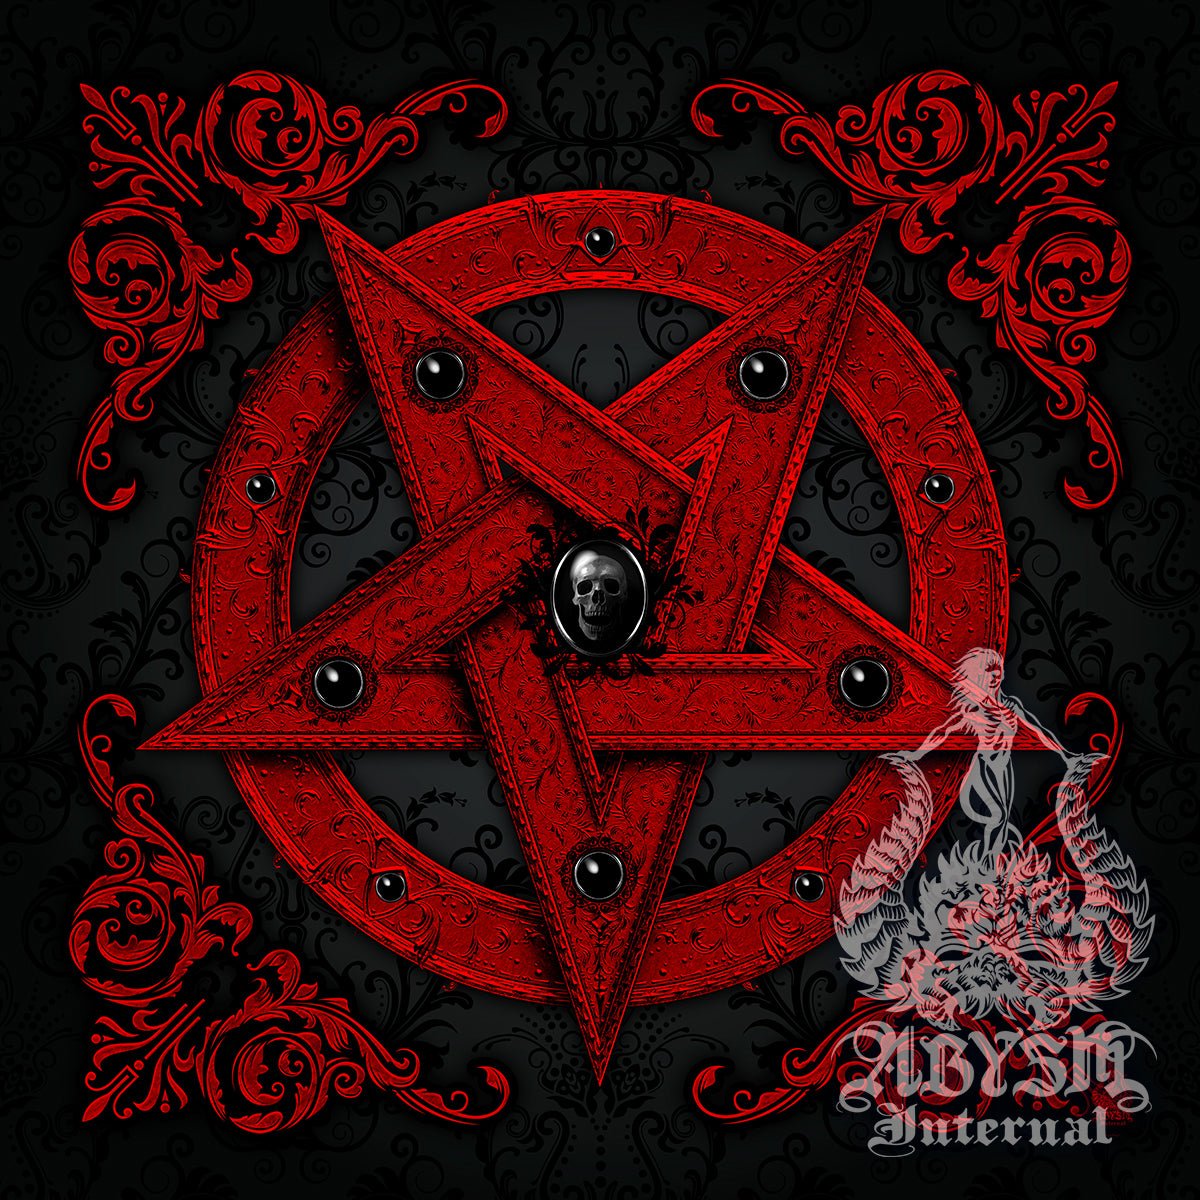 Pentagram - Abysm Internal